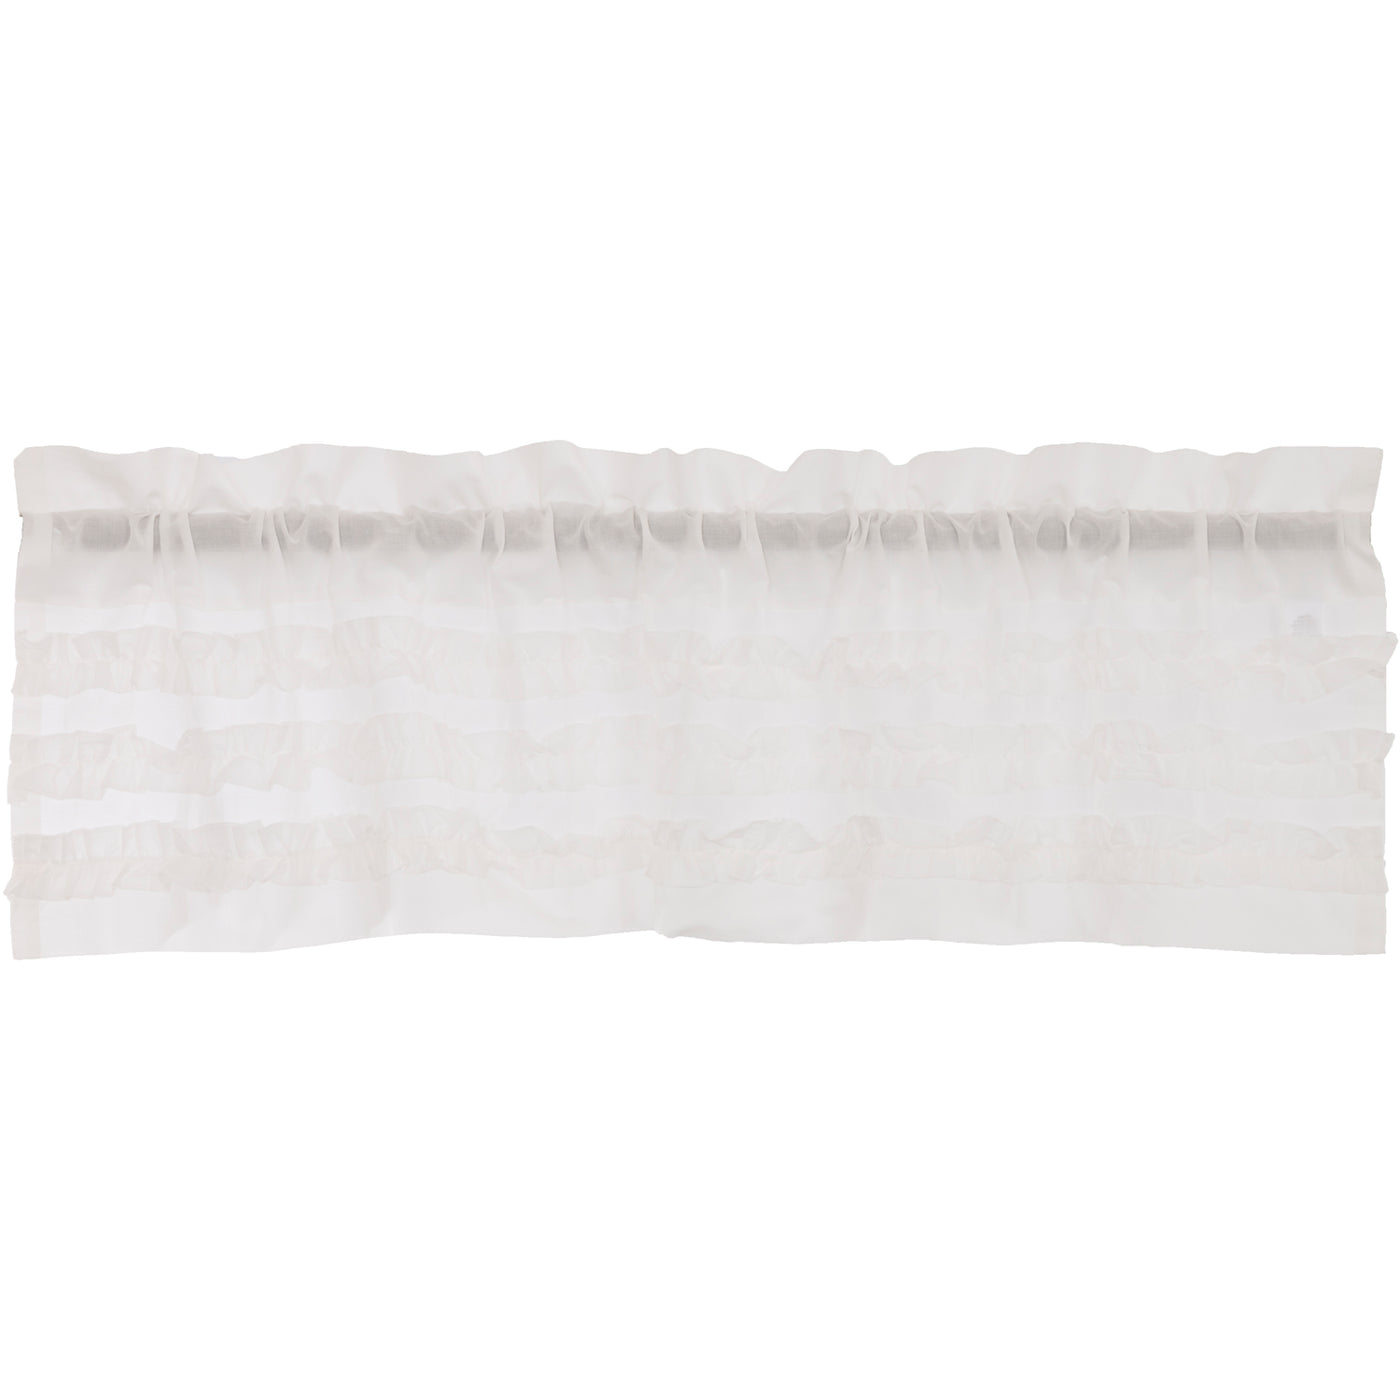 💙 White Ruffled Sheer Petticoat Valance Curtain 16" x 60"